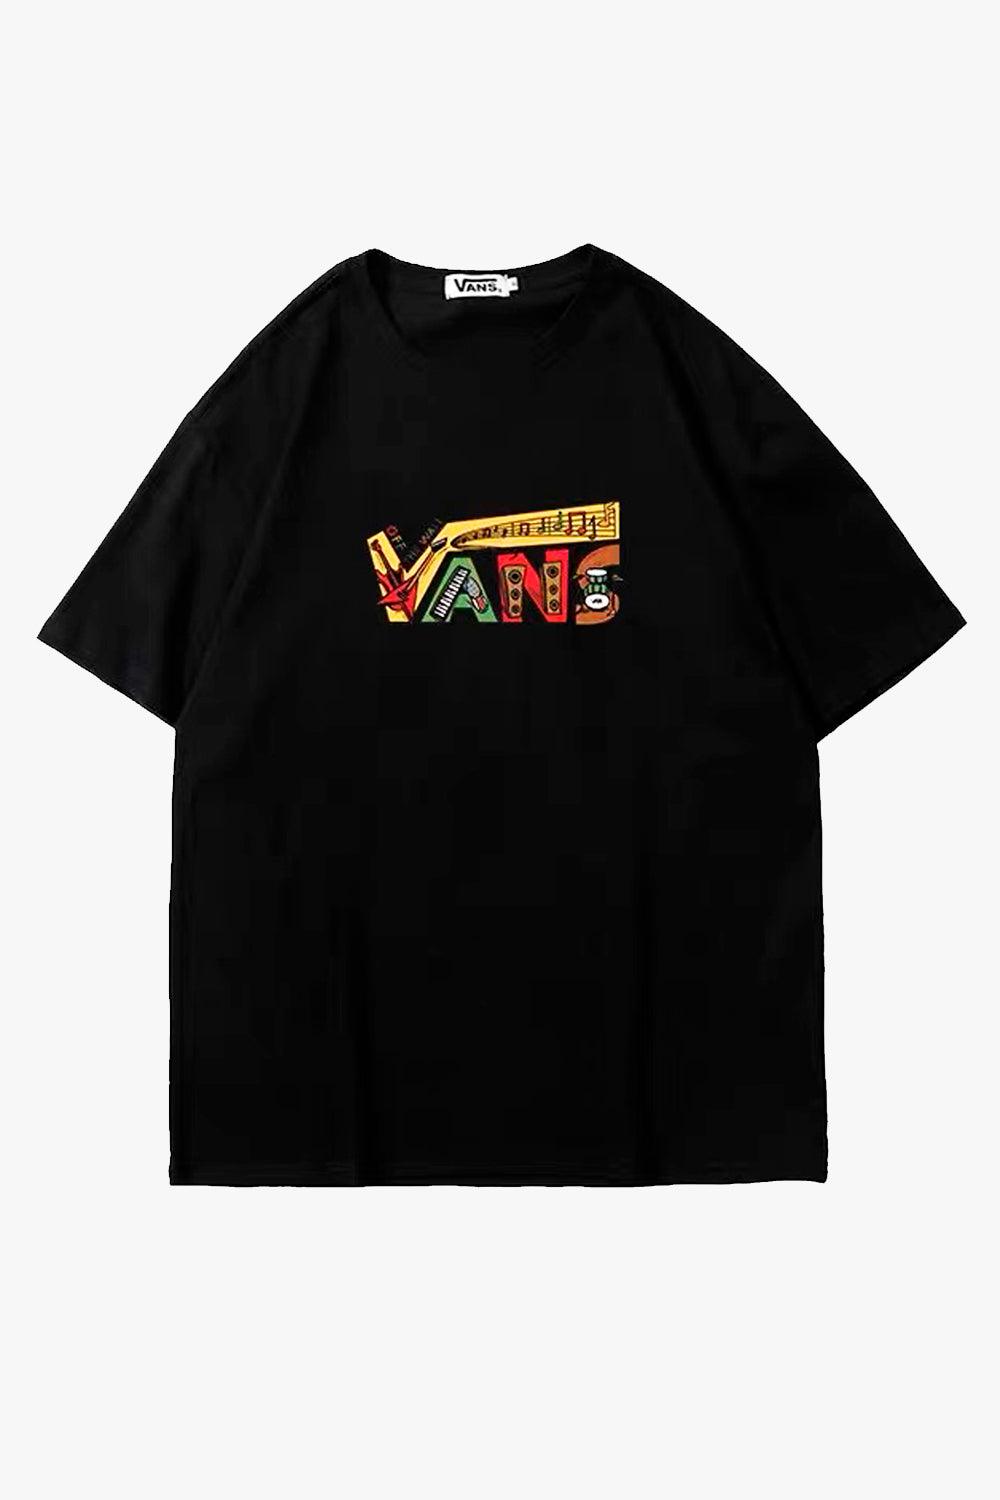 Vans Music Instruments Indie T-Shirt - Aesthetic Clothes Shop